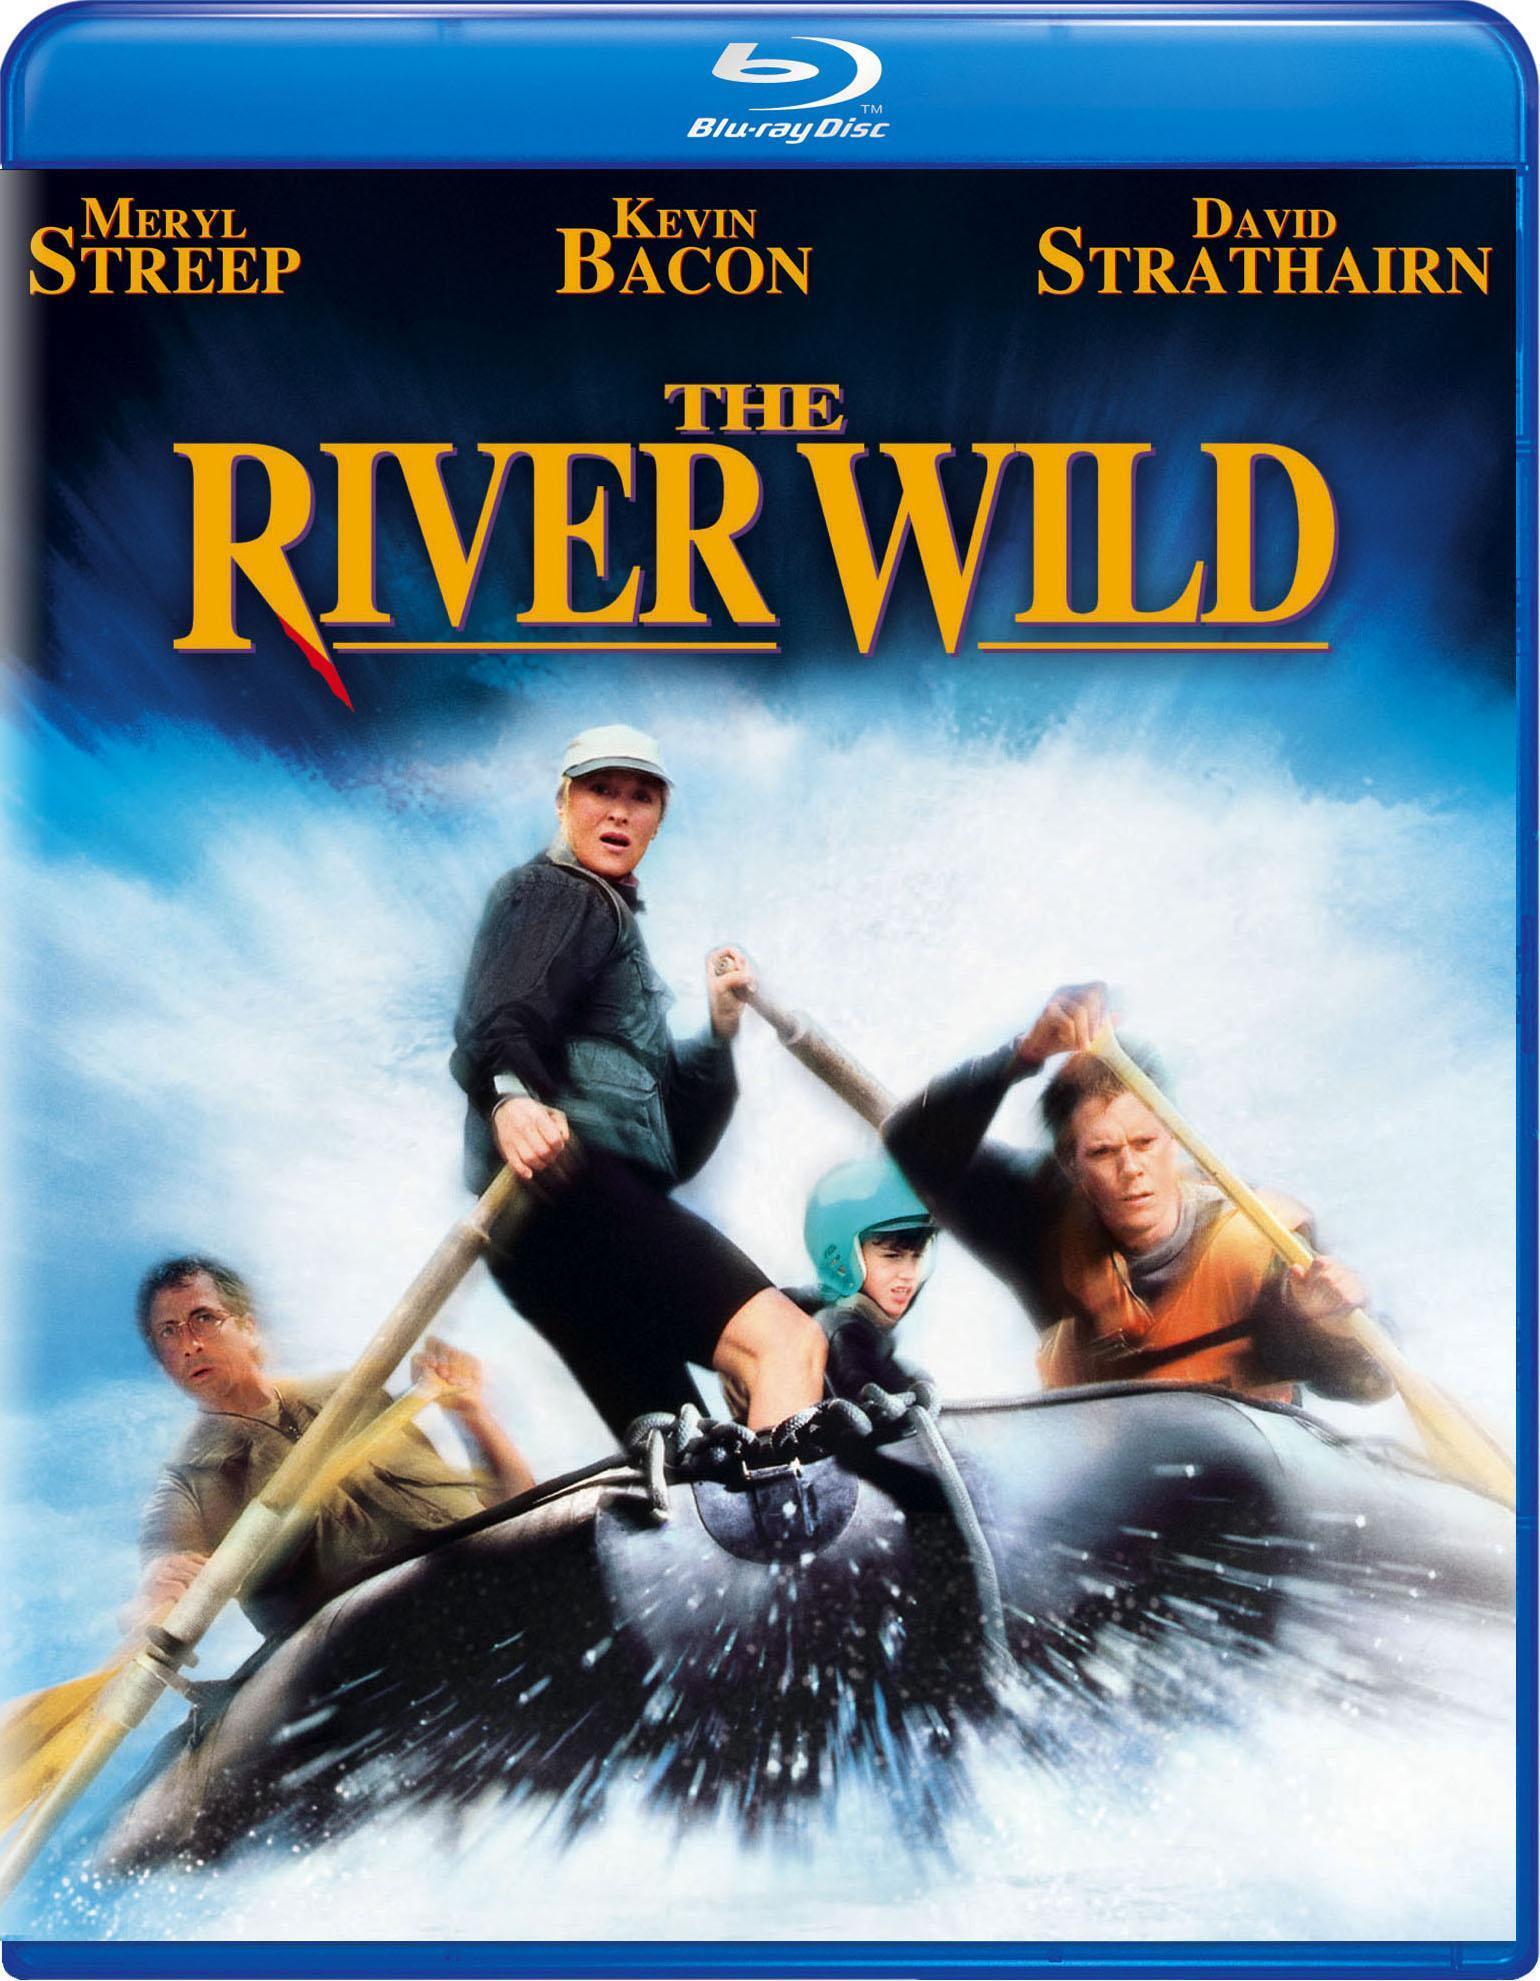 The River Wild - Blu-ray [ 1994 ]  - Adventure Movies On Blu-ray - Movies On GRUV